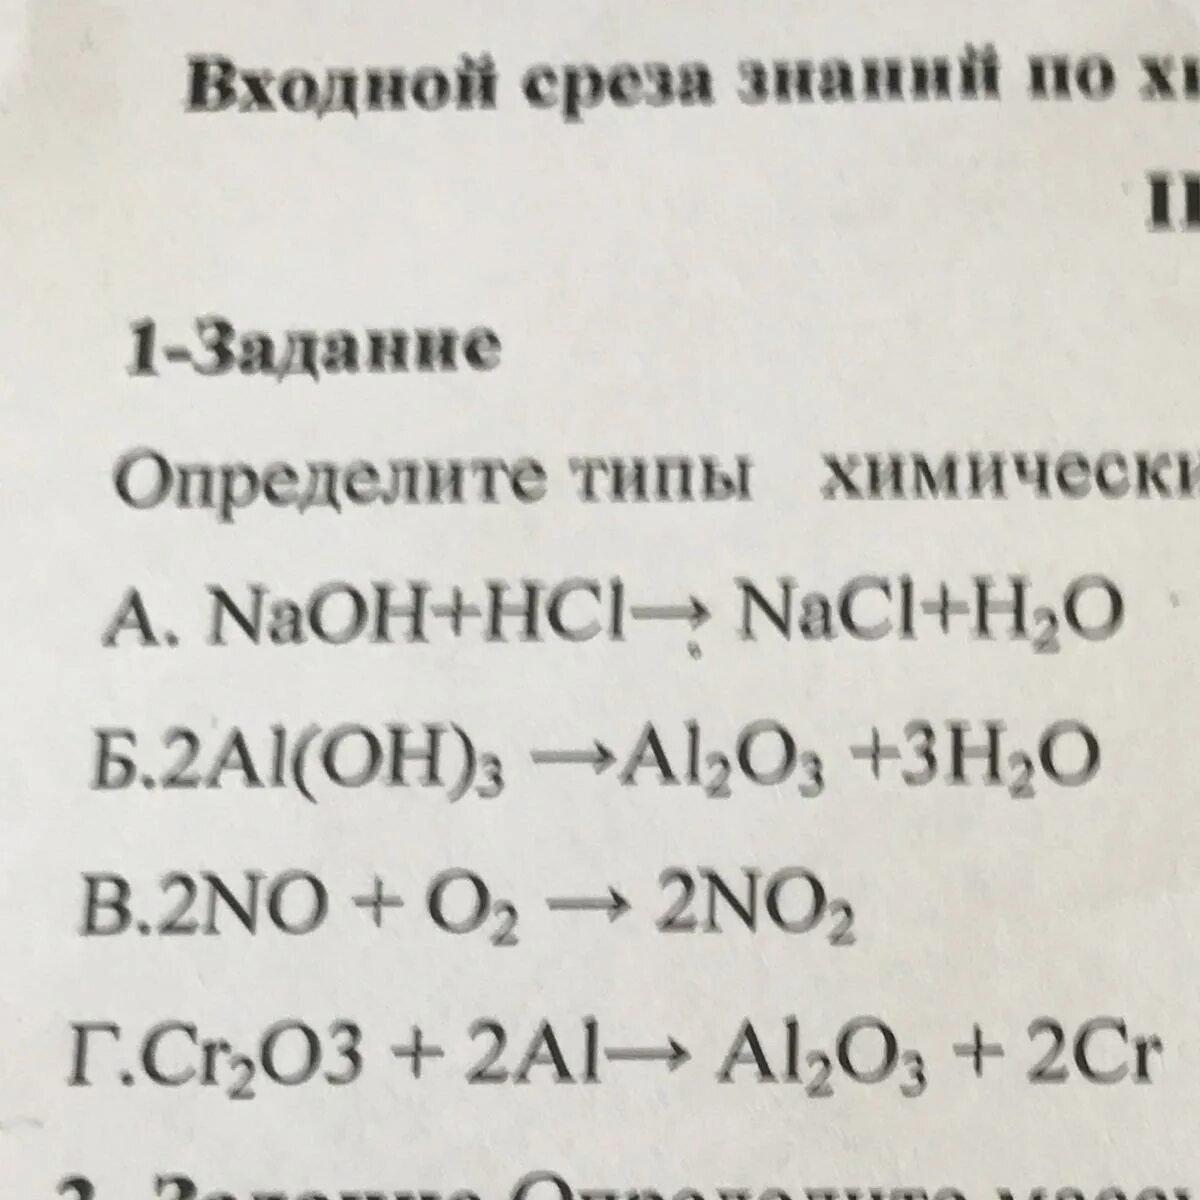 Cr 3 hci. Уравнение хим реакции NAOH+HCI=Naci+h2o. А1(он)3 → а1203 + н20. Раствить коэффициент NAOH + HCI = Naci +h2o. Определите Тип химической реакции , уравнение которой : HCI+NAOH-Naci+h2o.